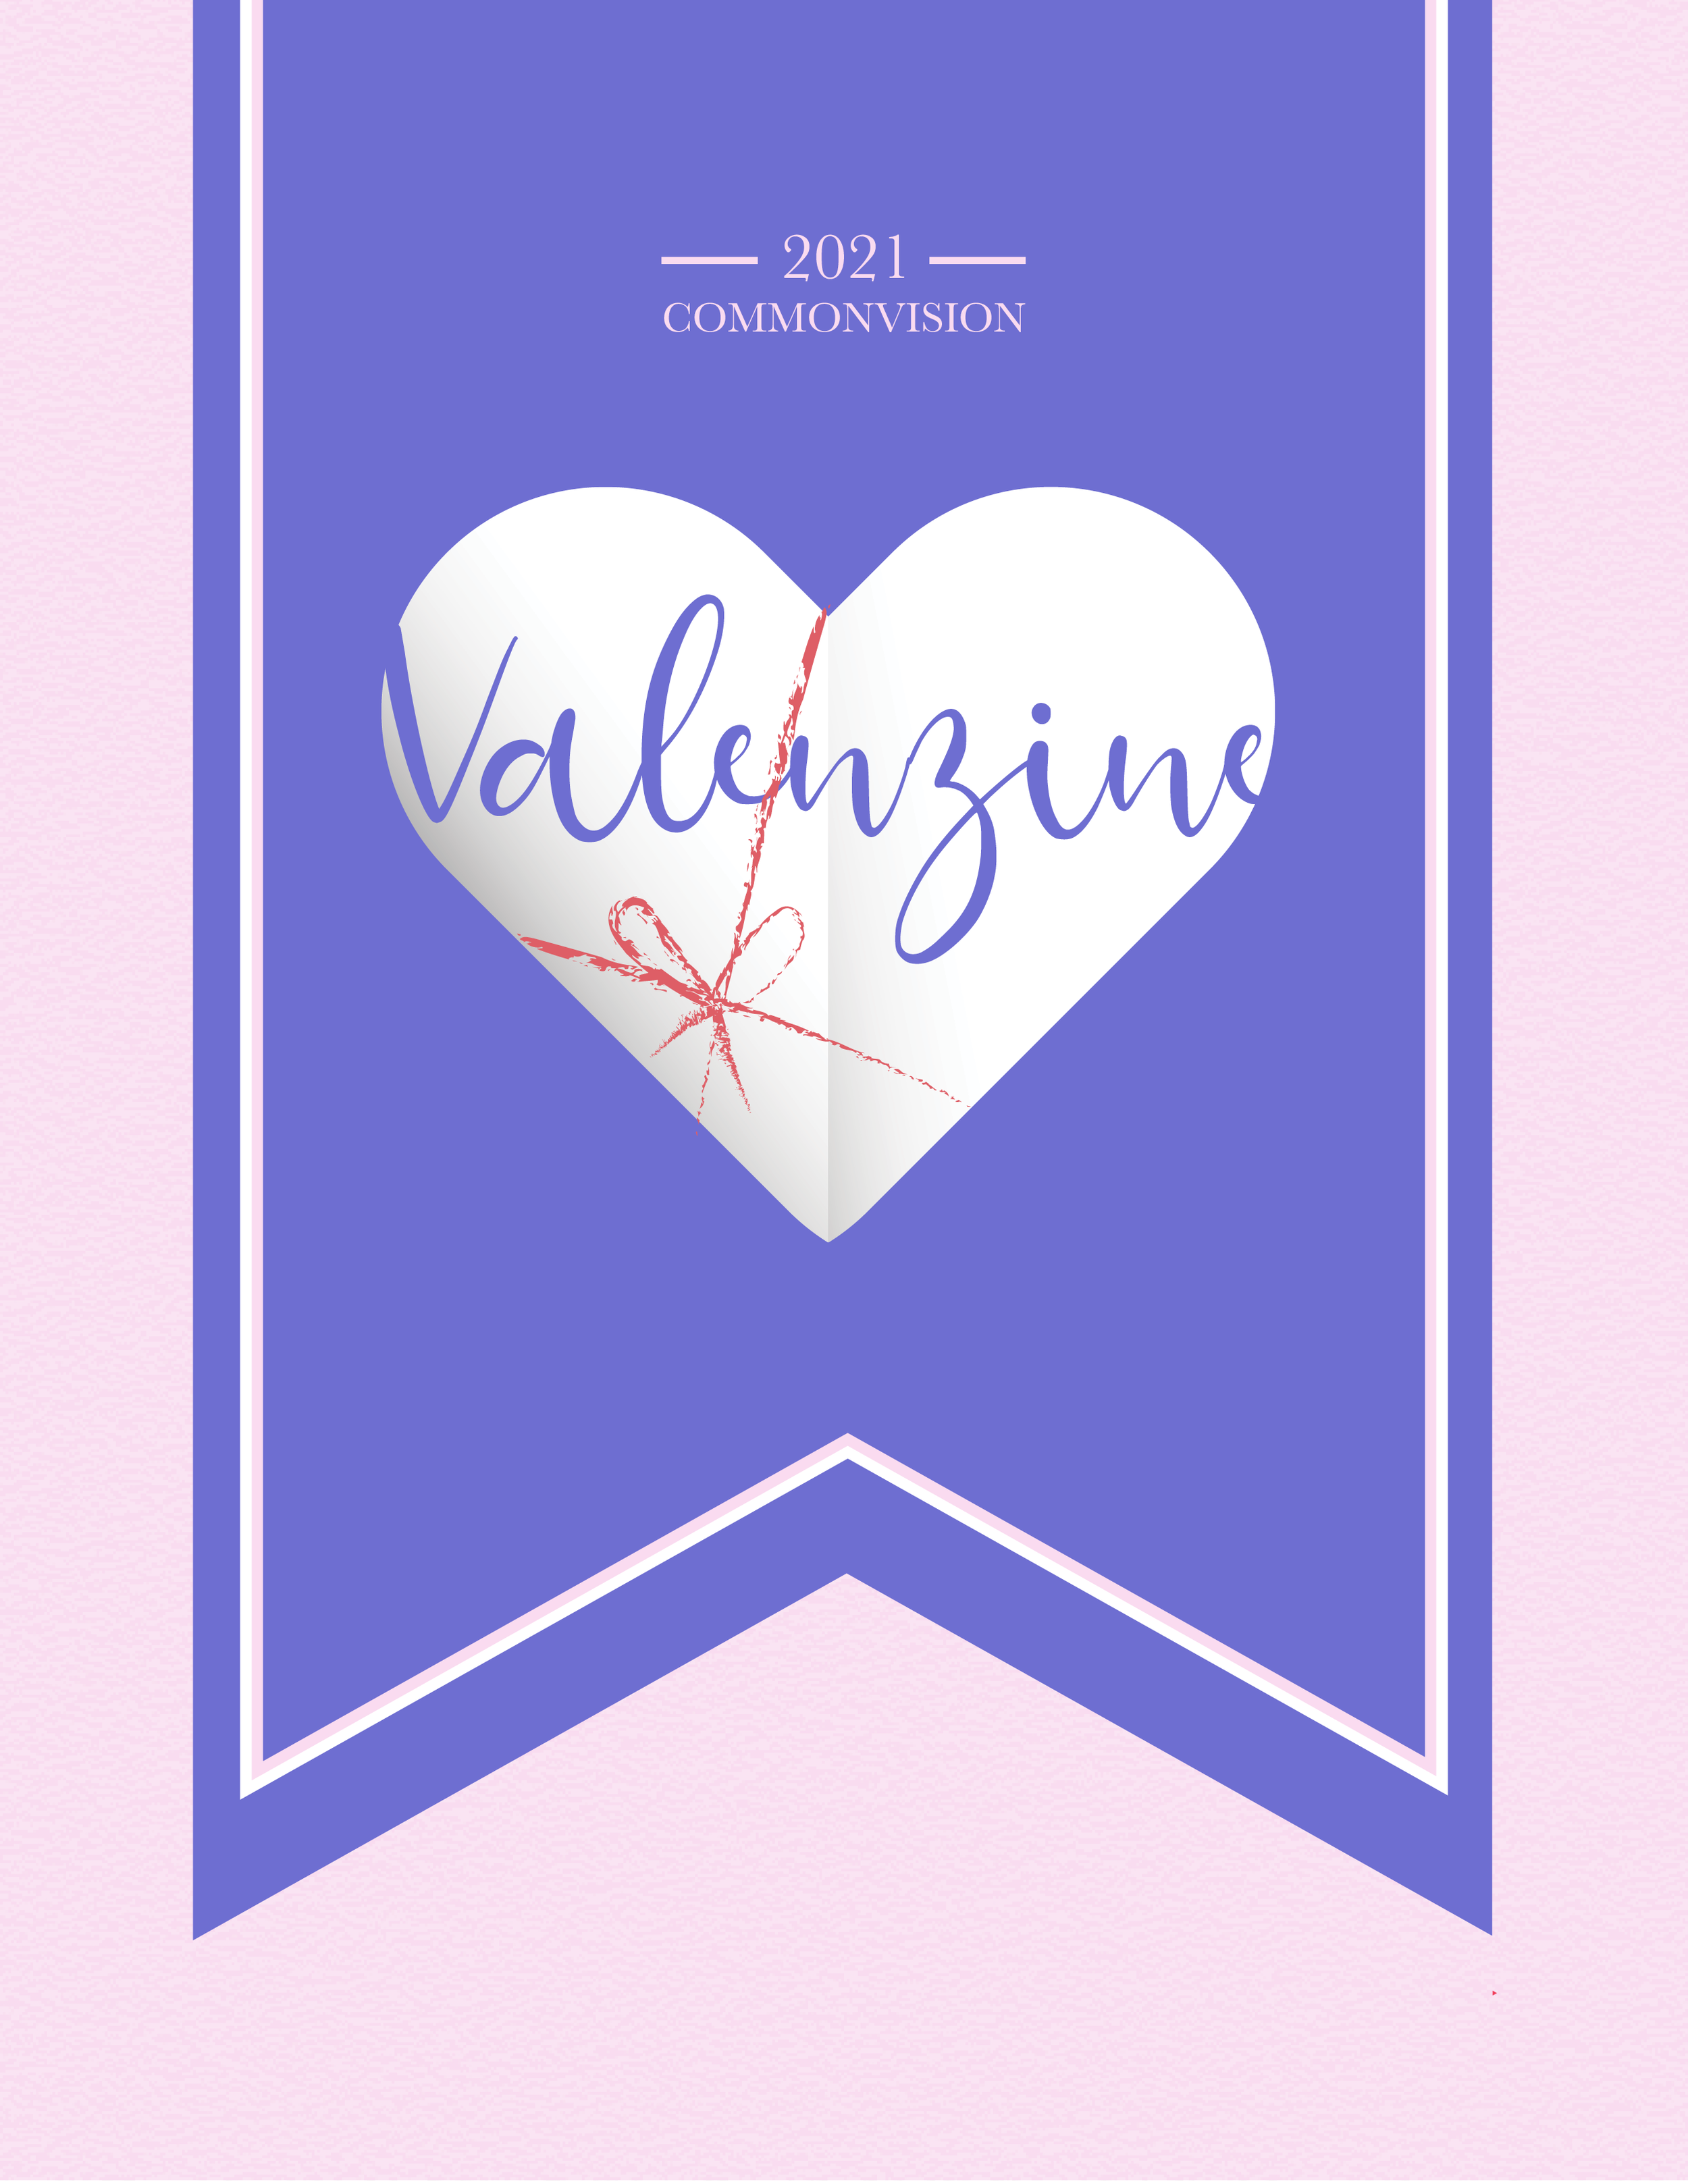 Valenzine Heart Cover by Amy Phan